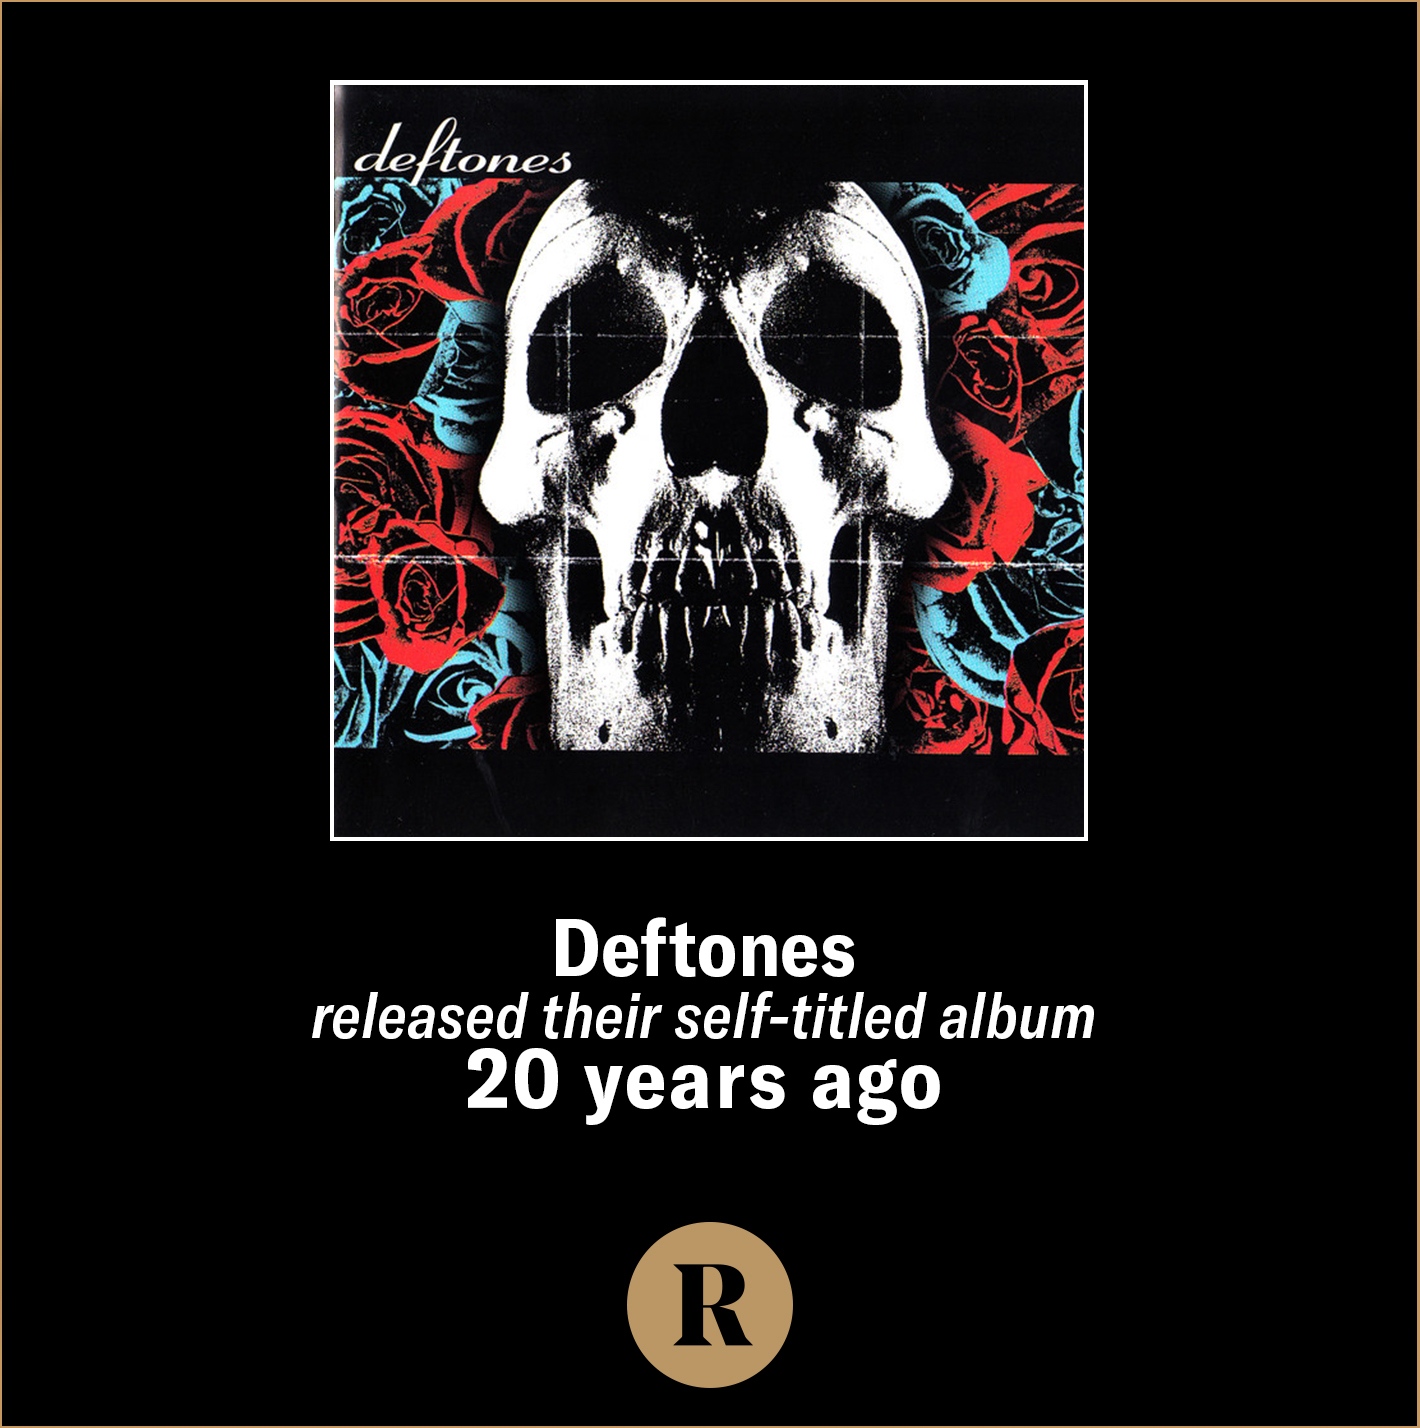 revolvermag on X: ⚡ @Deftones released their self-titled album